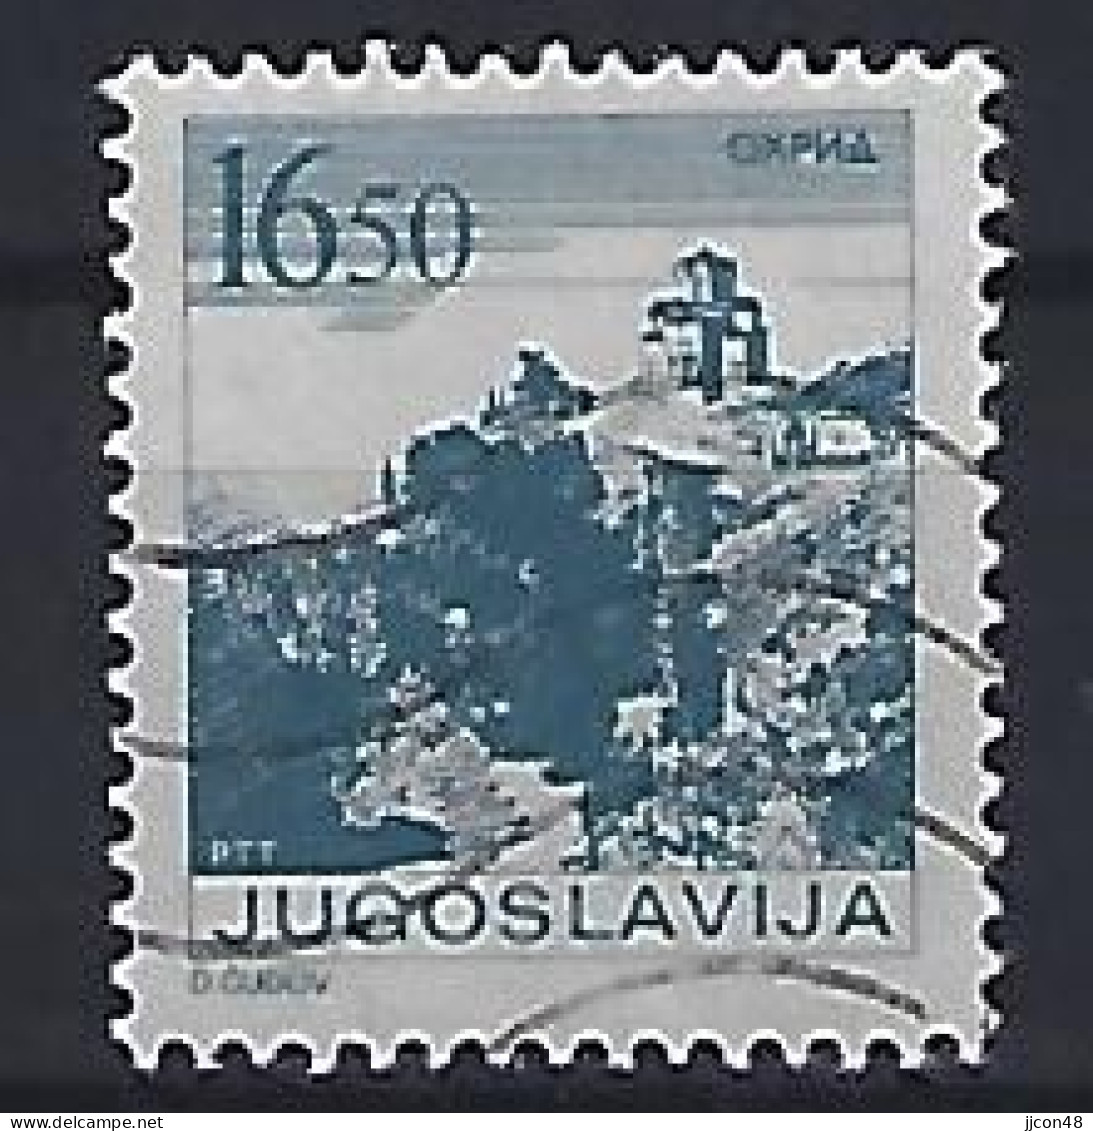 Jugoslavia 1983  Sehenswurdigkeiten (o) Mi.1995 A - Gebraucht